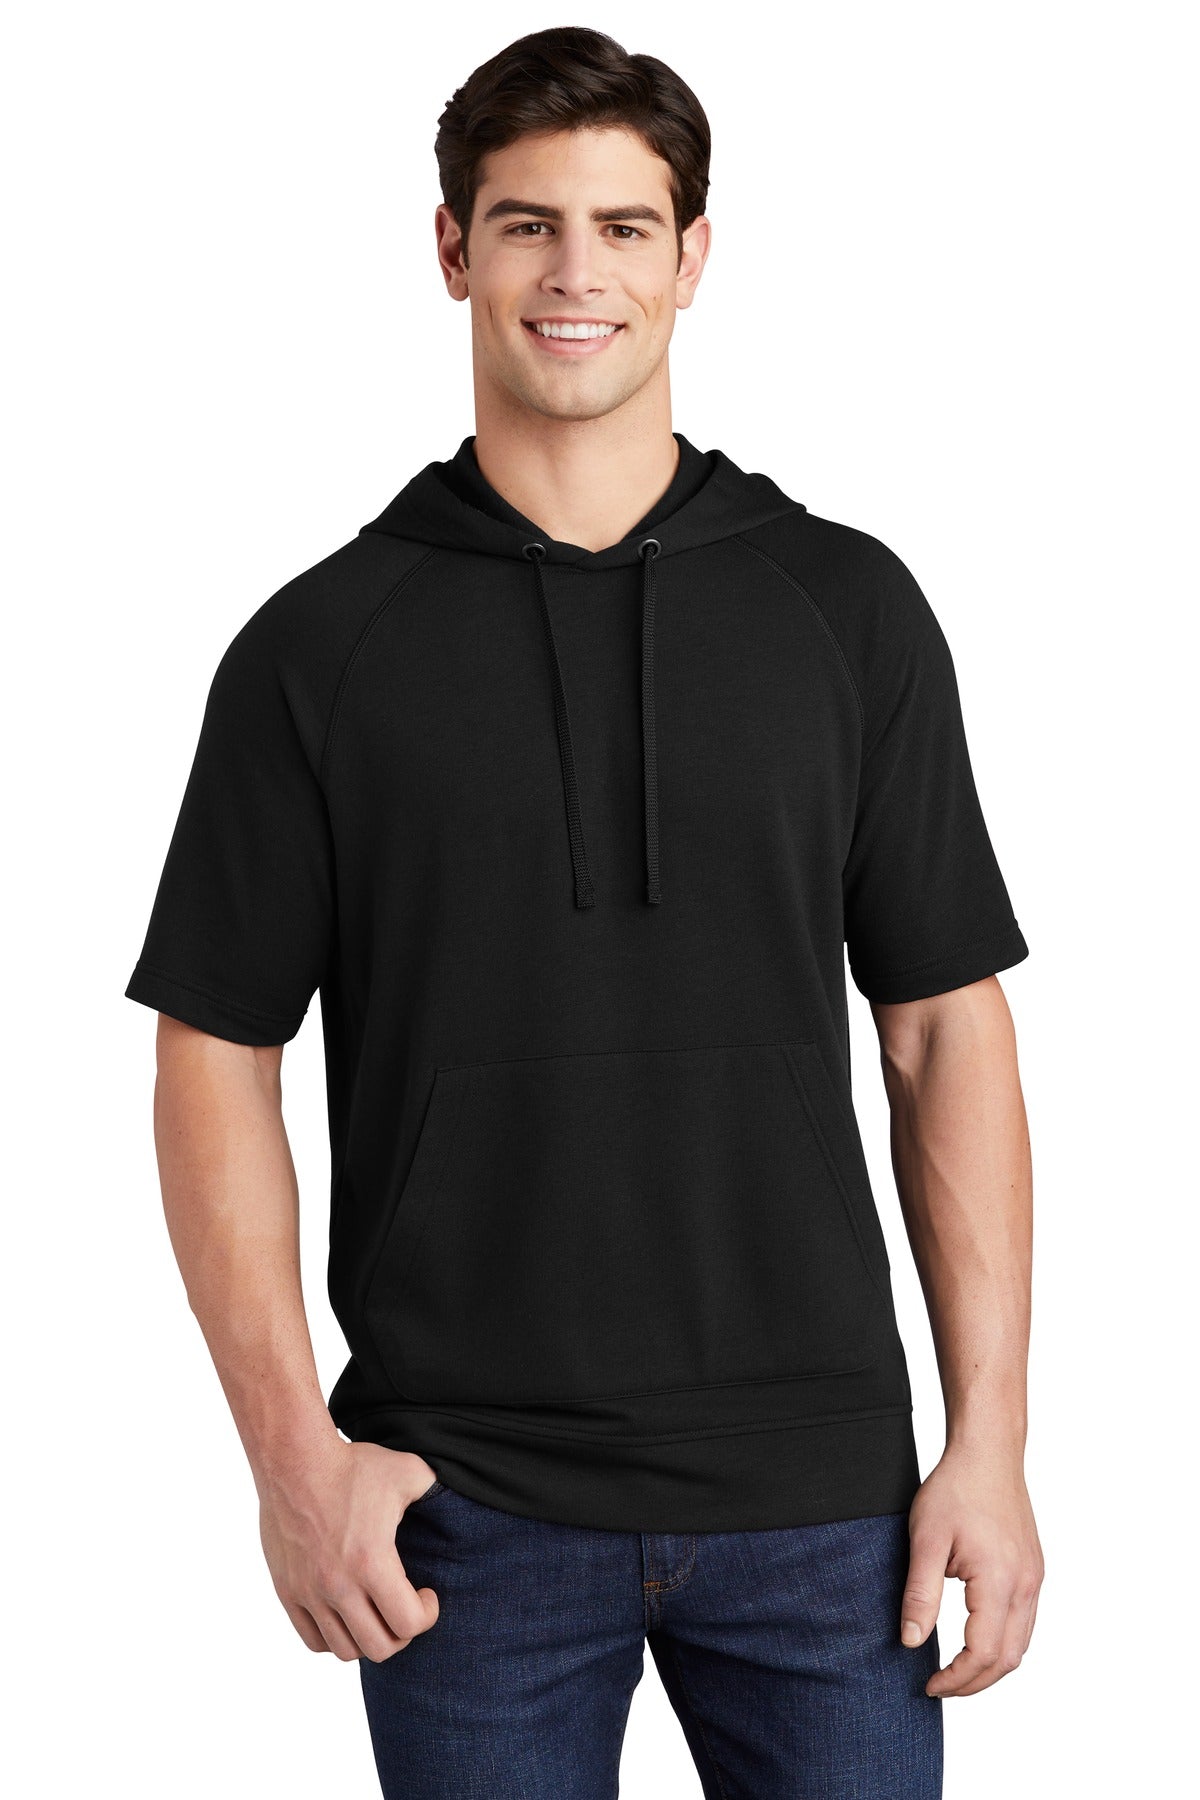 Team Truth StandsSport-Tek ® PosiCharge ® Tri-Blend Wicking Fleece Short Sleeve Hooded Pullover ST297